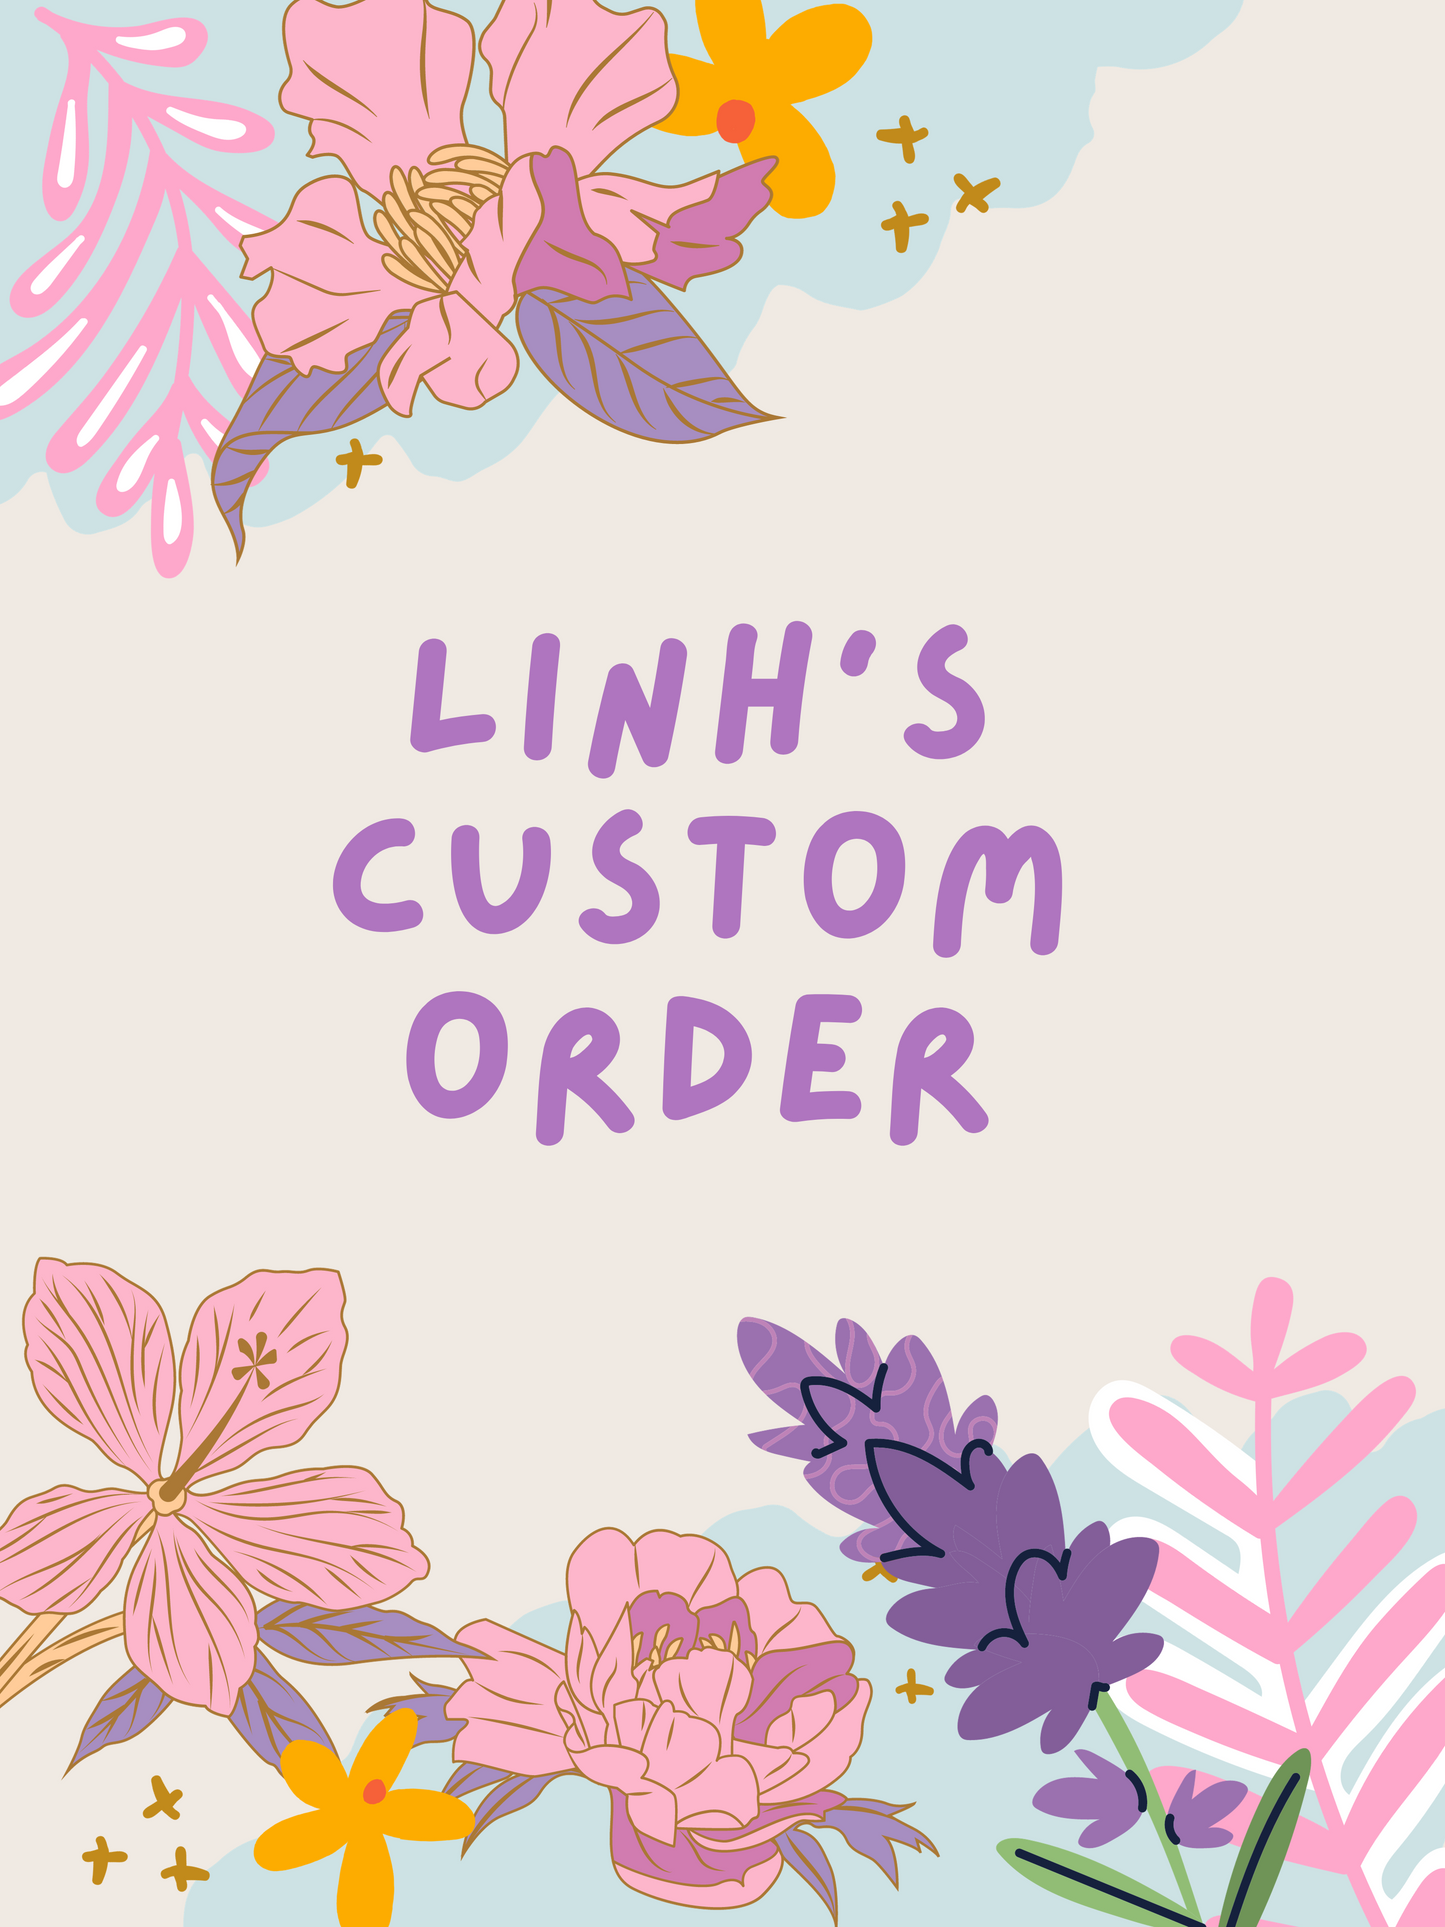 Linh's Custom Order